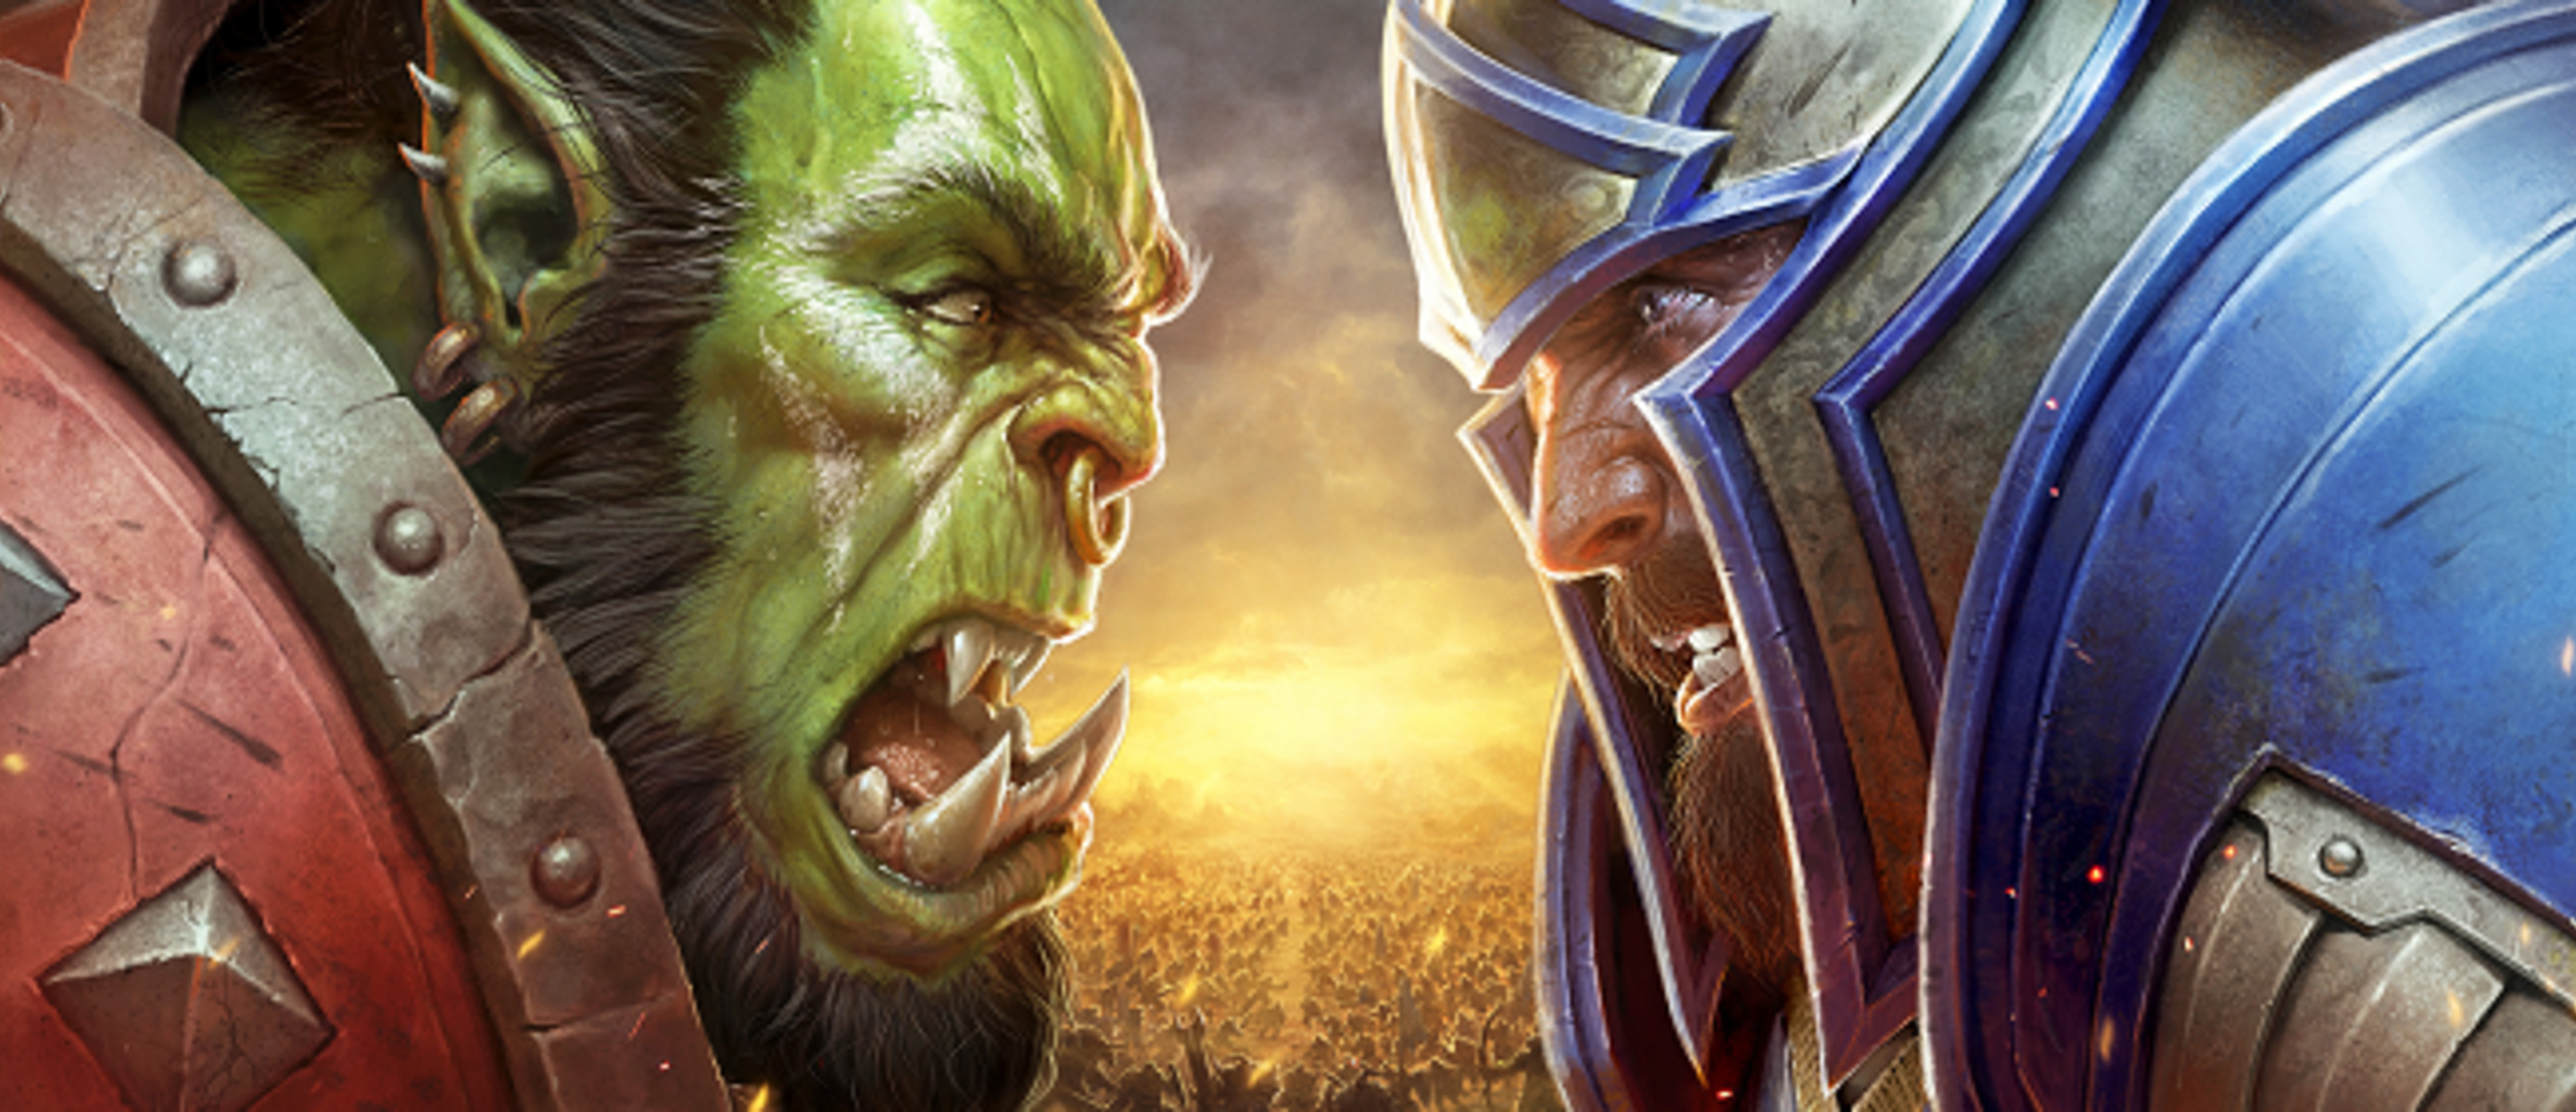 Орда или альянс. Варкрафт Альянс против орды. Орда против Альянса варкрафт 3. Варкрафт 2: битва за Азерот. World of Warcraft Орда и Альянс.